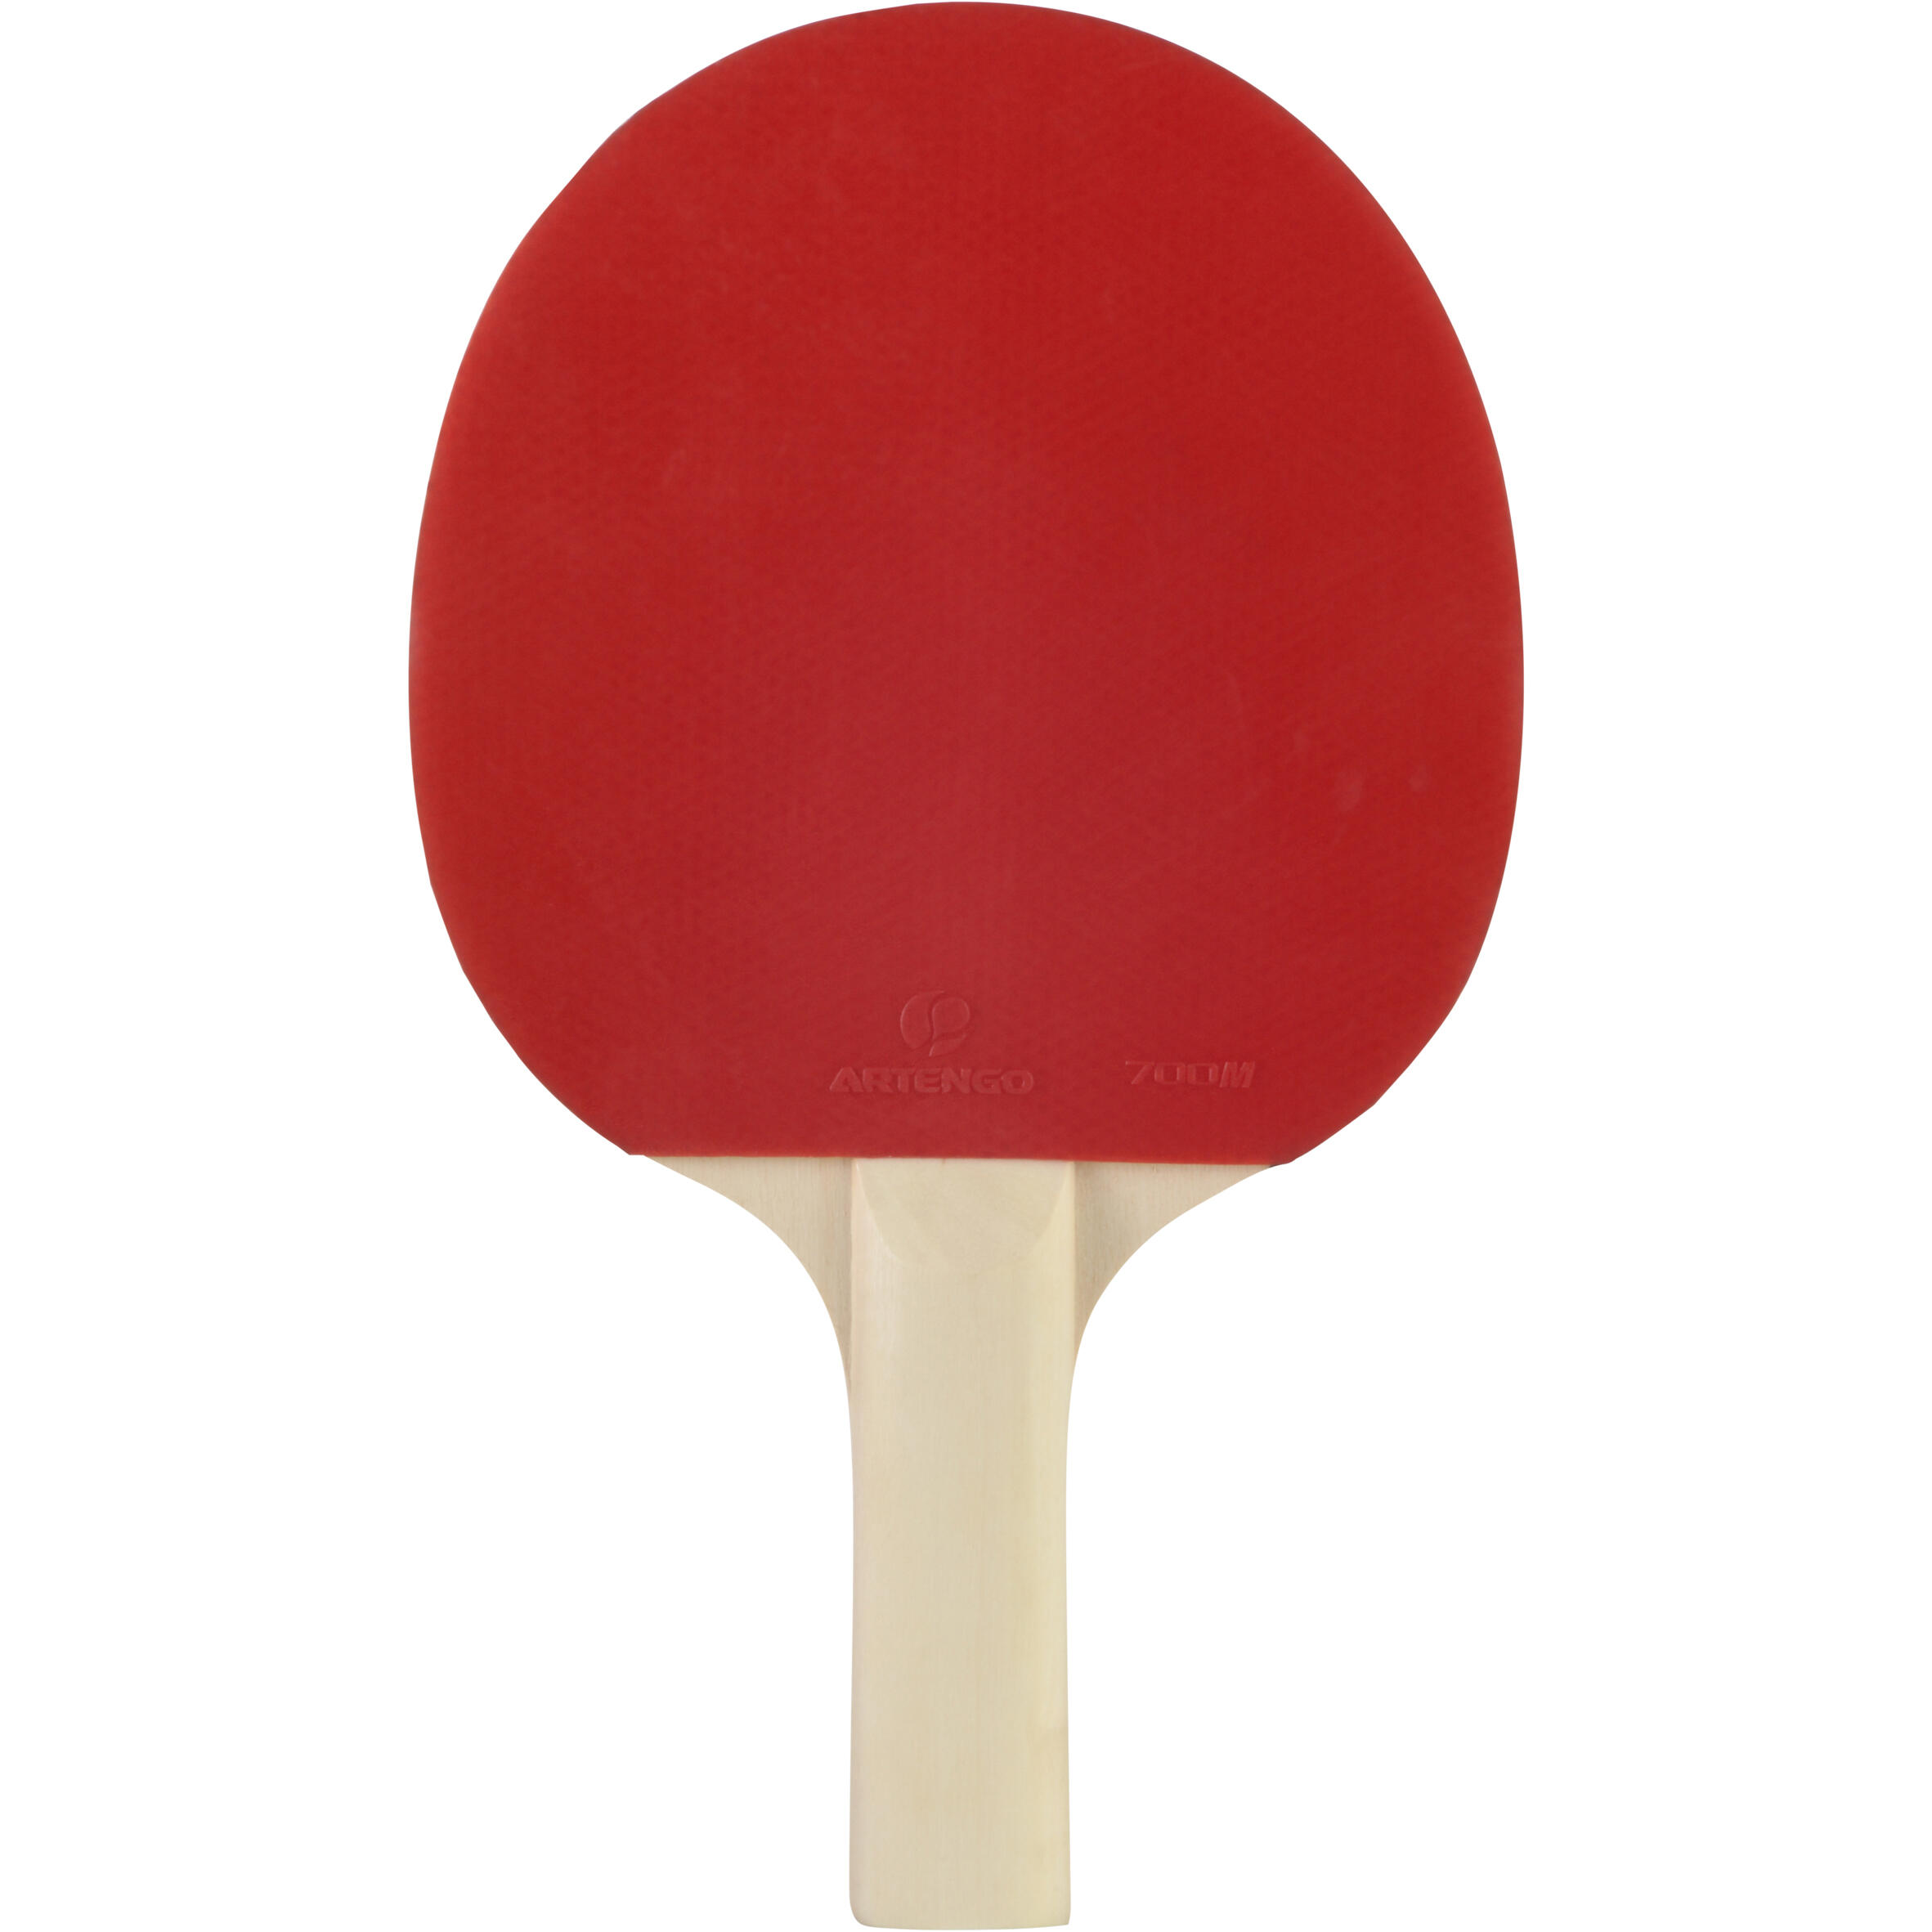 artengo table tennis bat